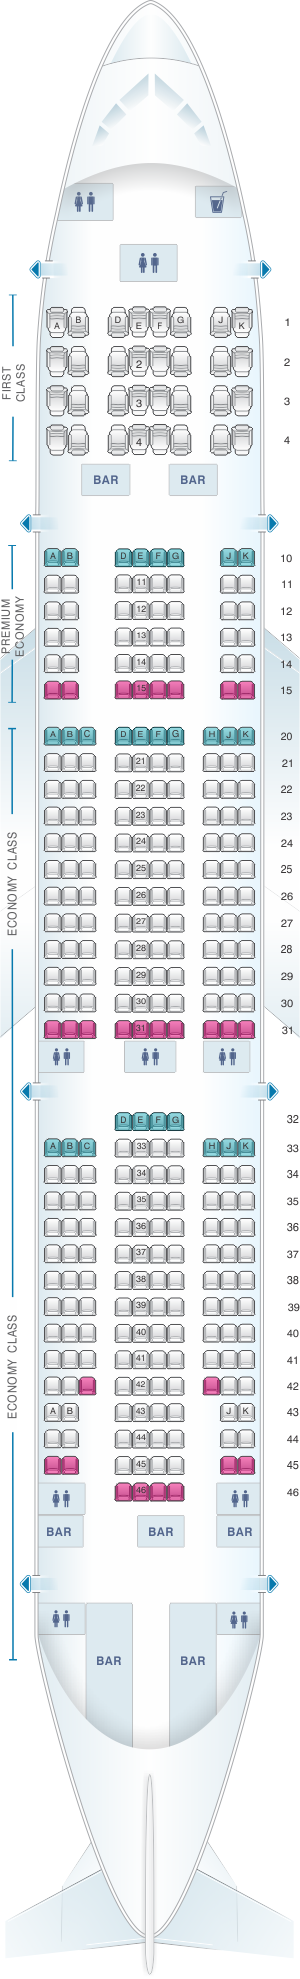 Seat map for British Airways Boeing B777 200 LGW layout V2